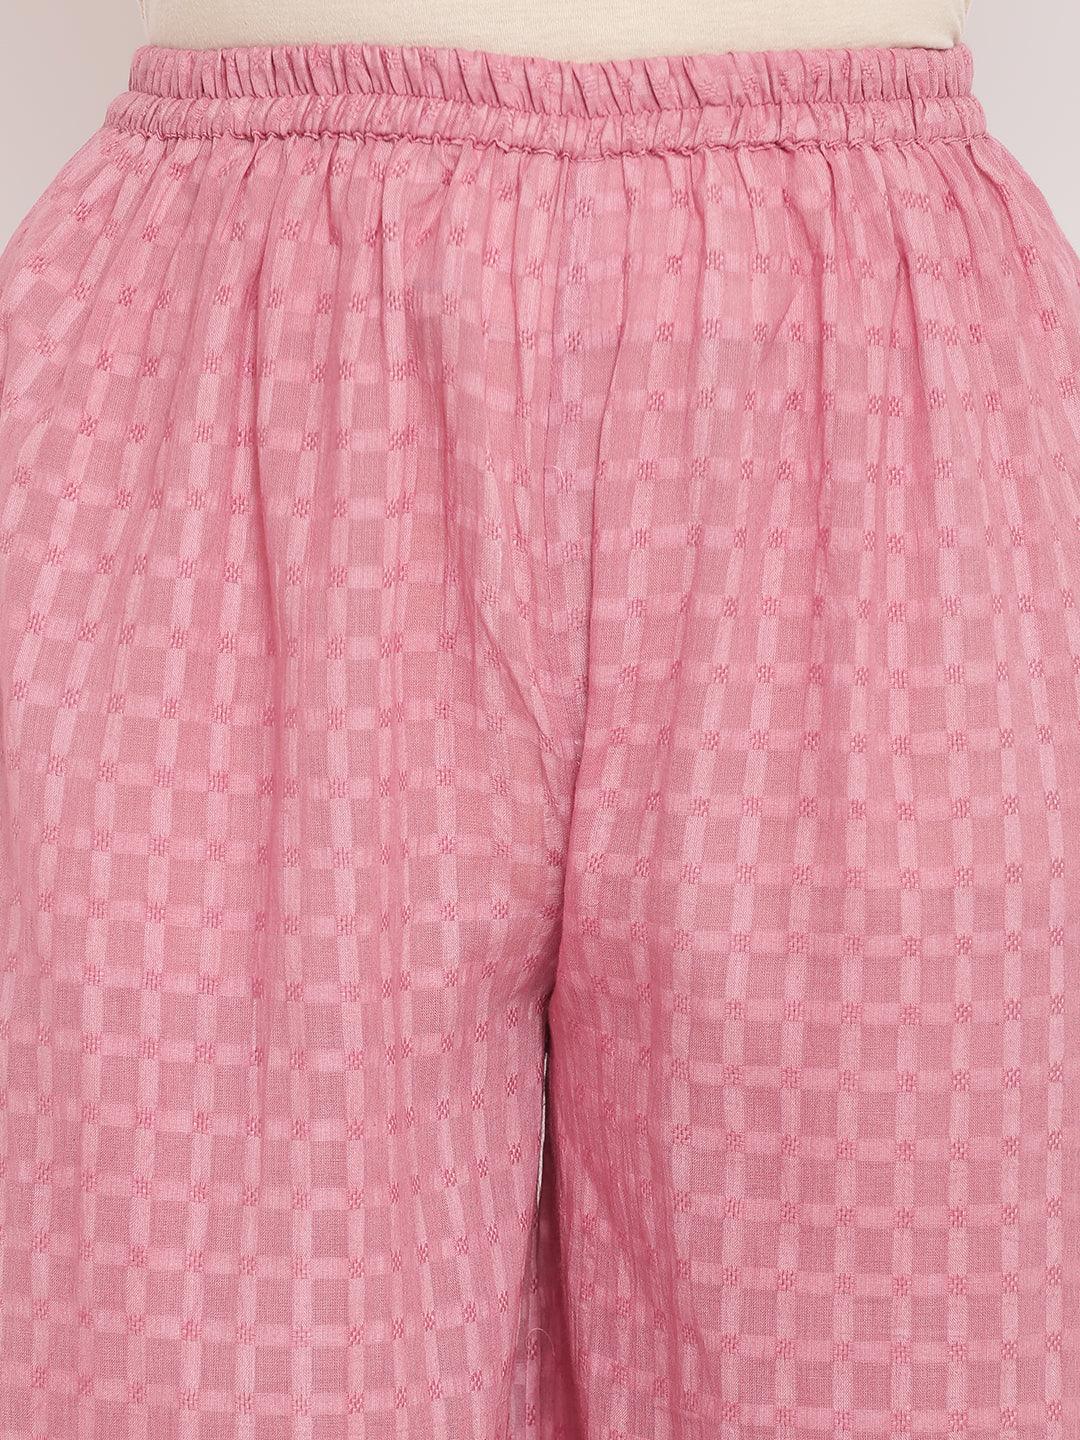 Pink Pin-Tucks Kurta-Palazzo - trueBrowns